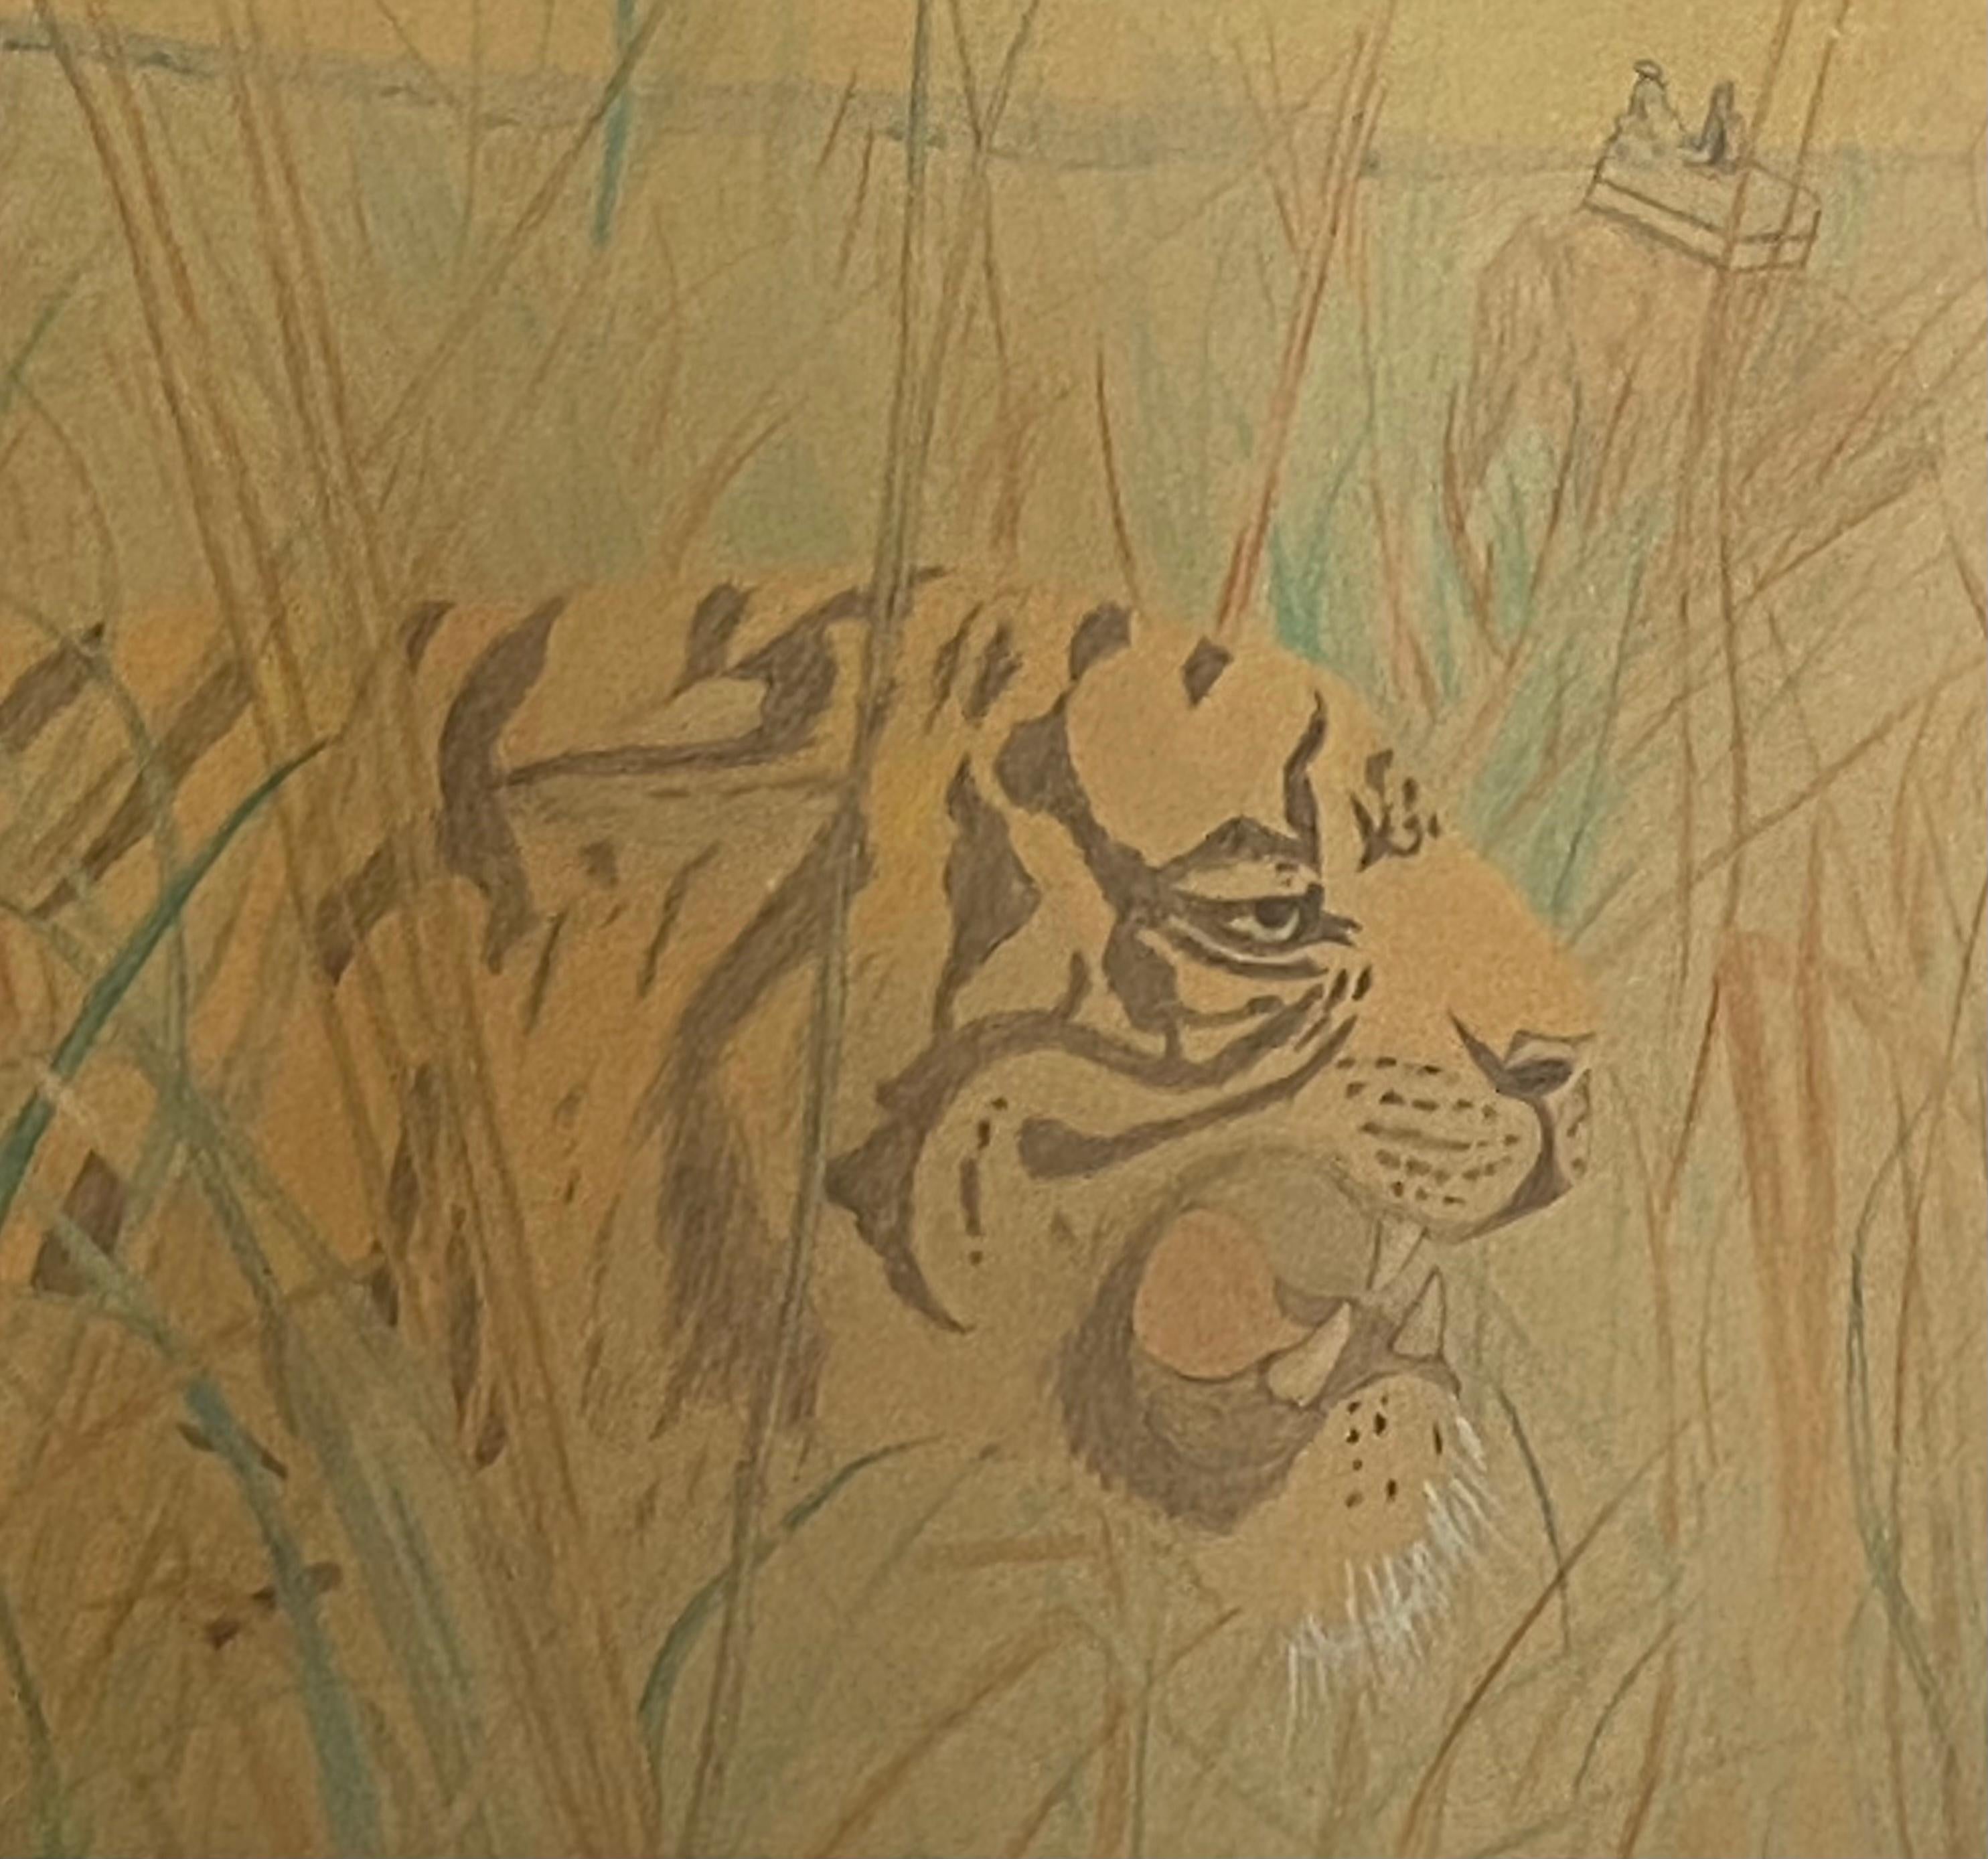 H. A. Wilson Animal Art - “Tiger”